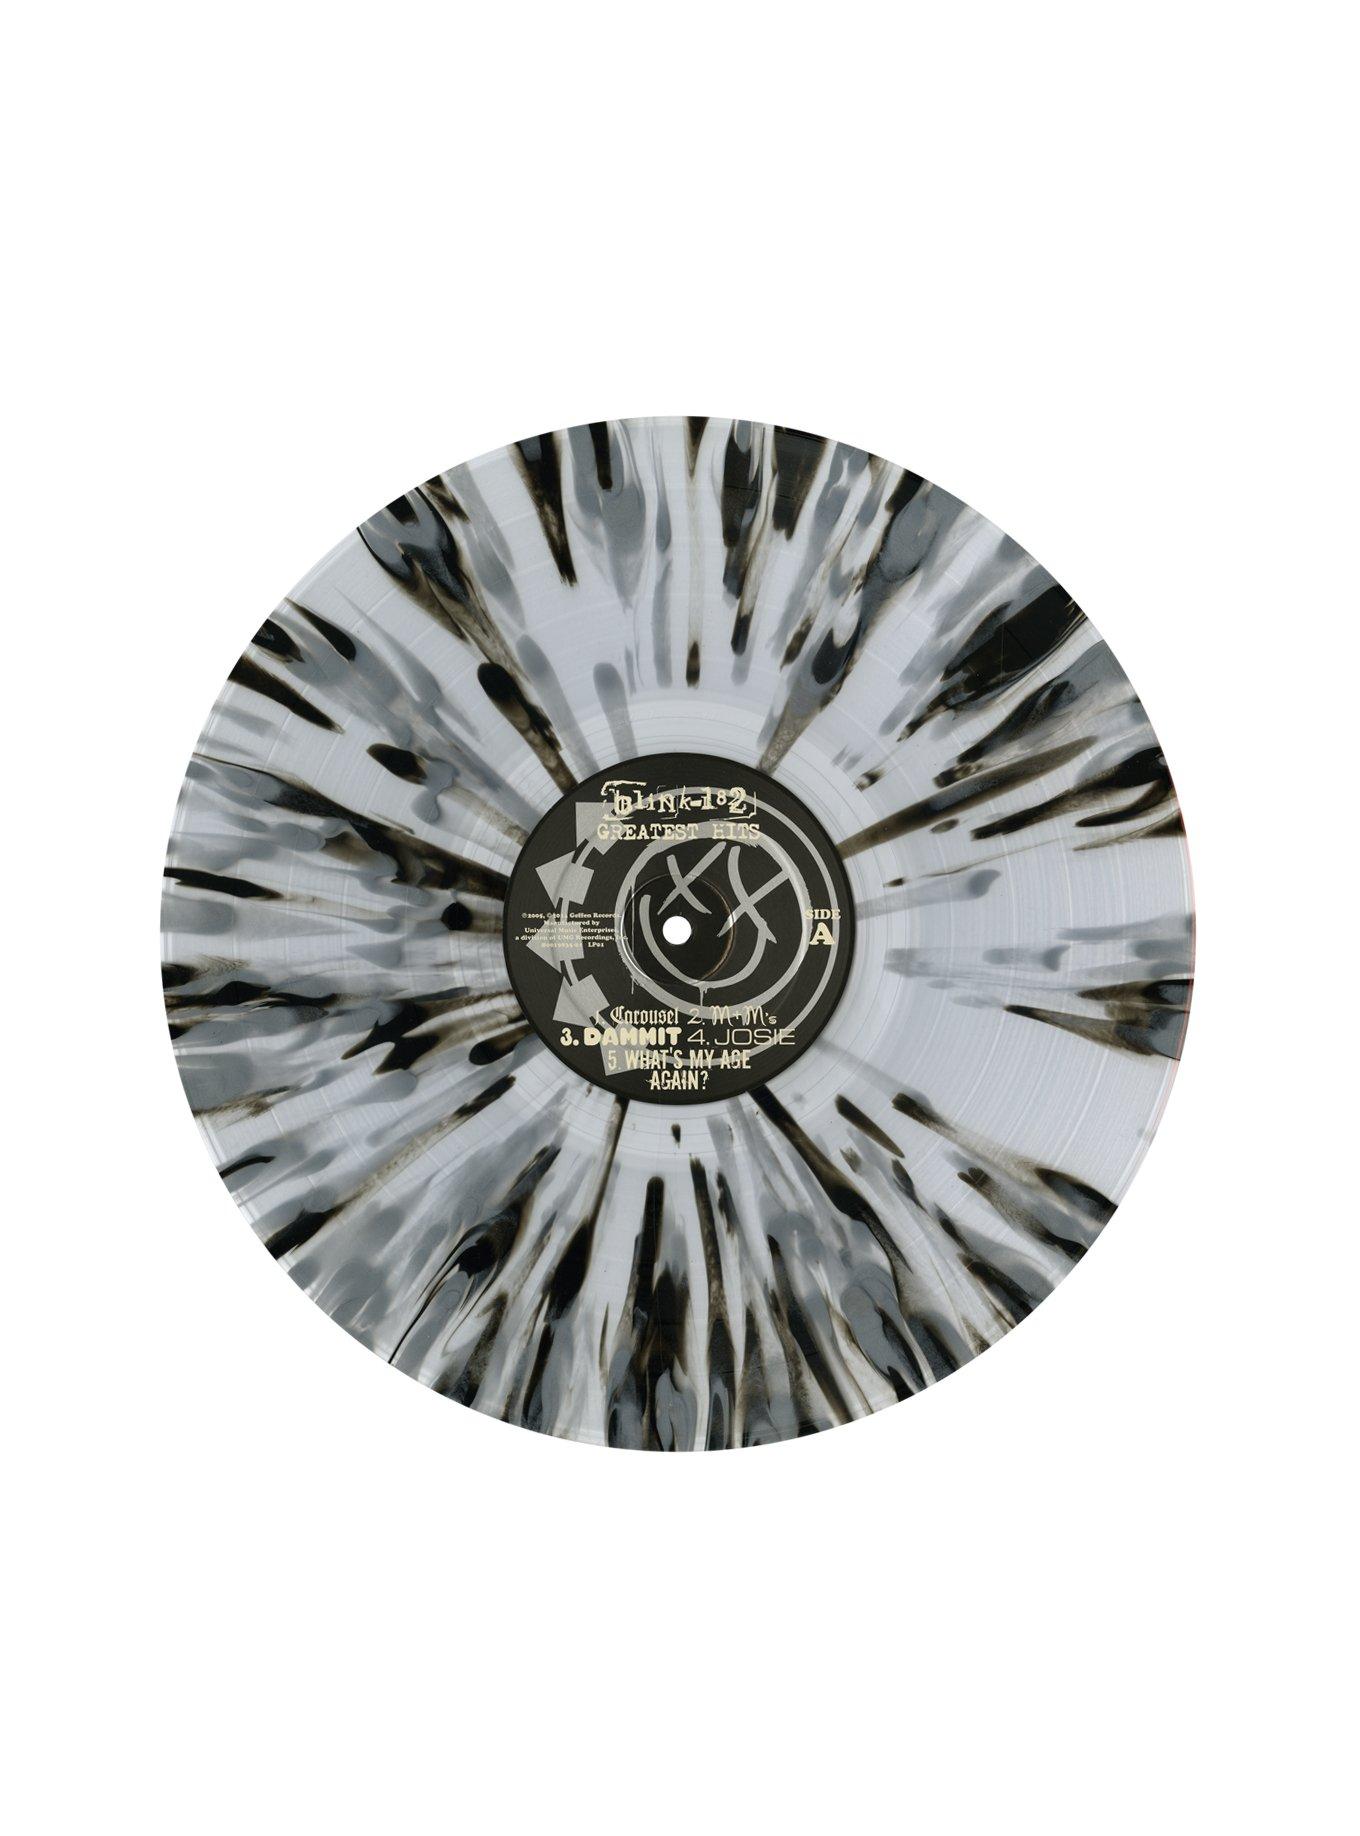 Blink-182 - Greatest Hits Vinyl LP Hot Topic Exclusive, , alternate